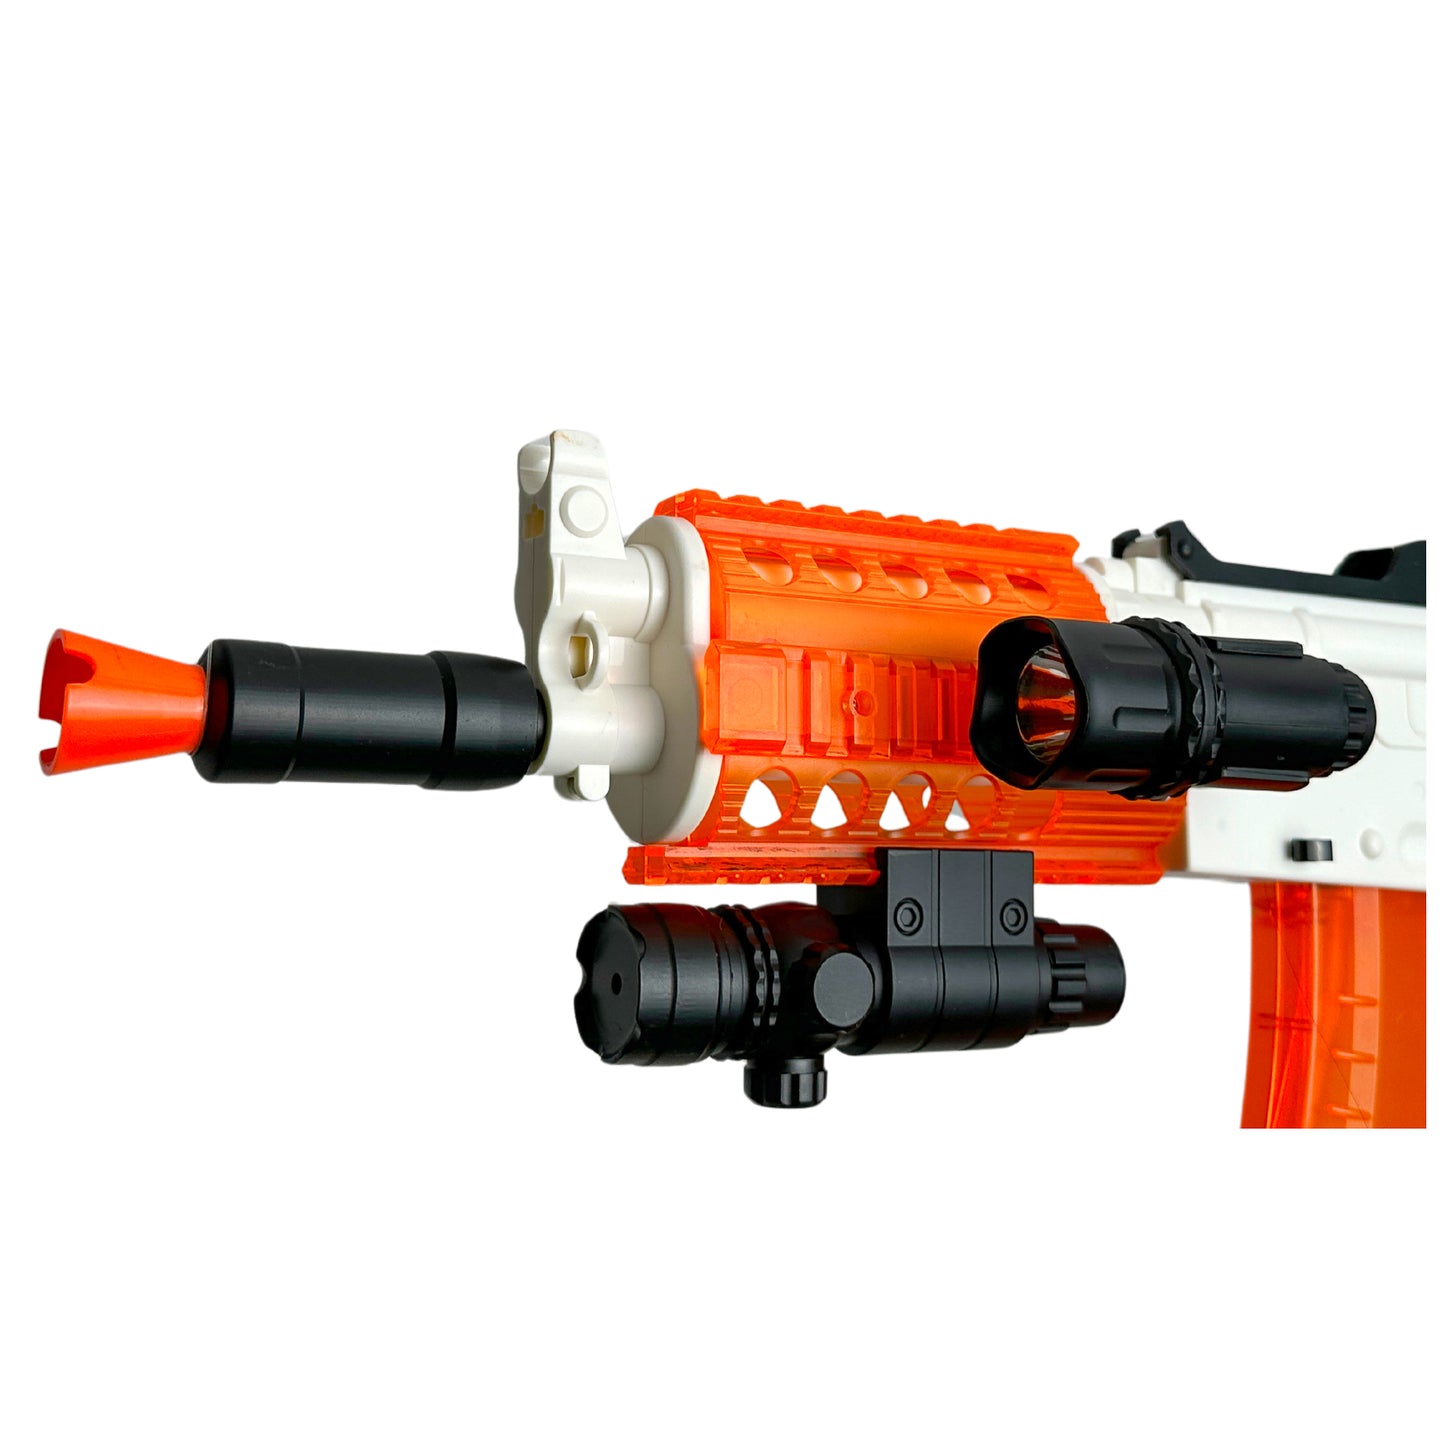 LH AK74U Rifle - Gel Blaster (Orange)